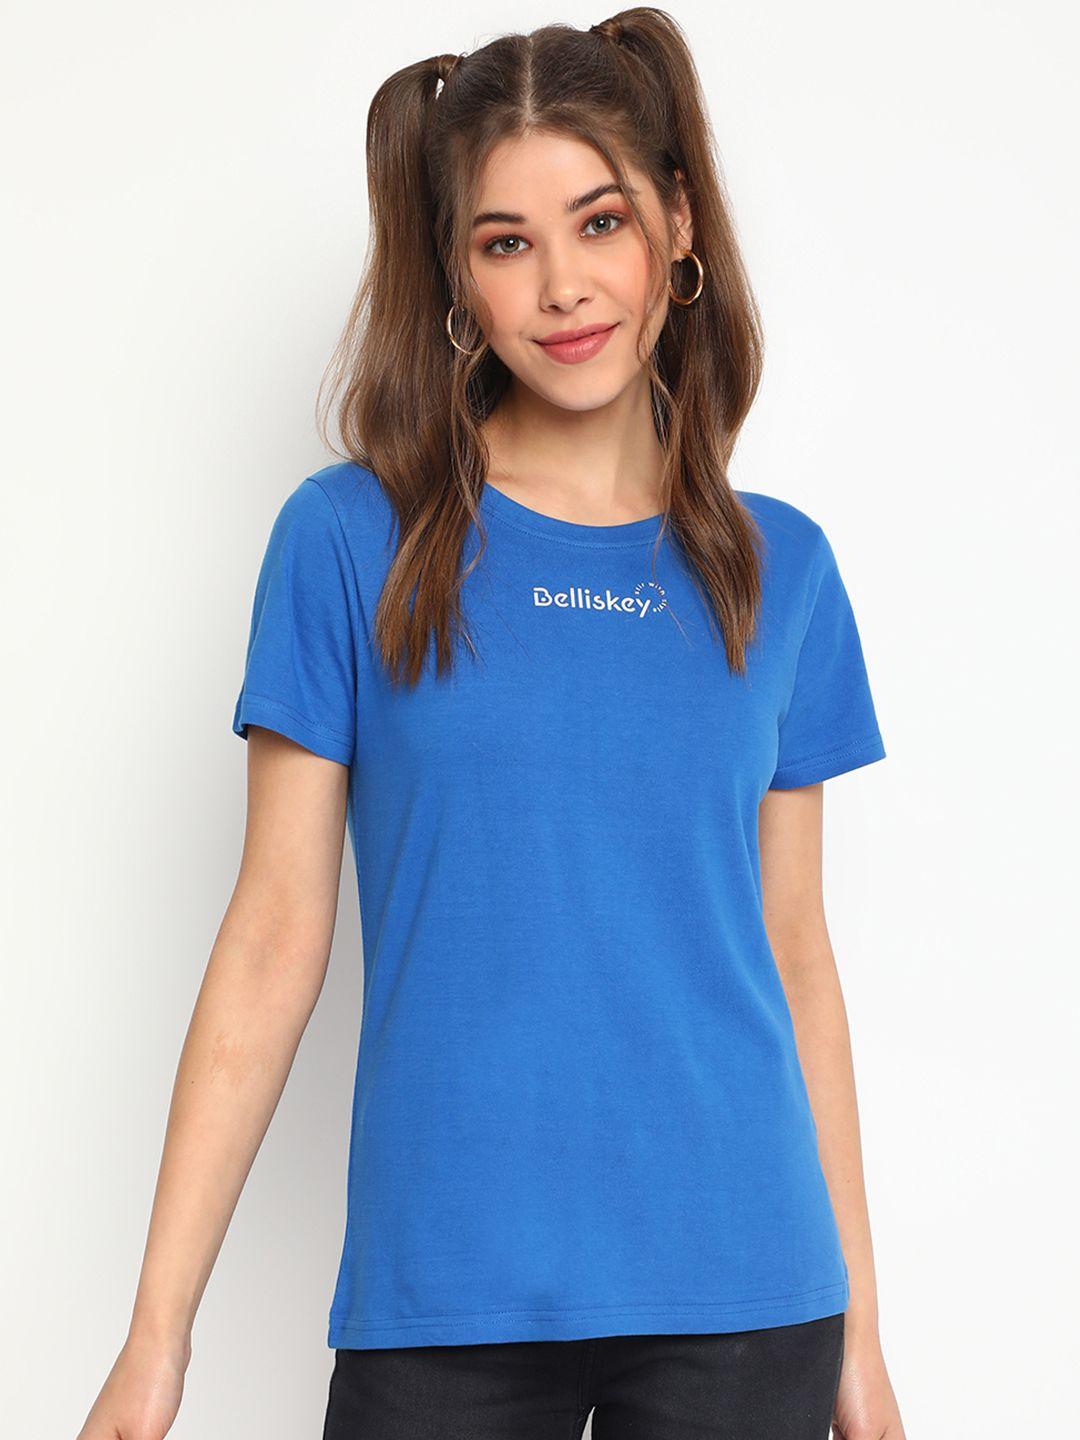 belliskey women blue & white brand logo printed t-shirt